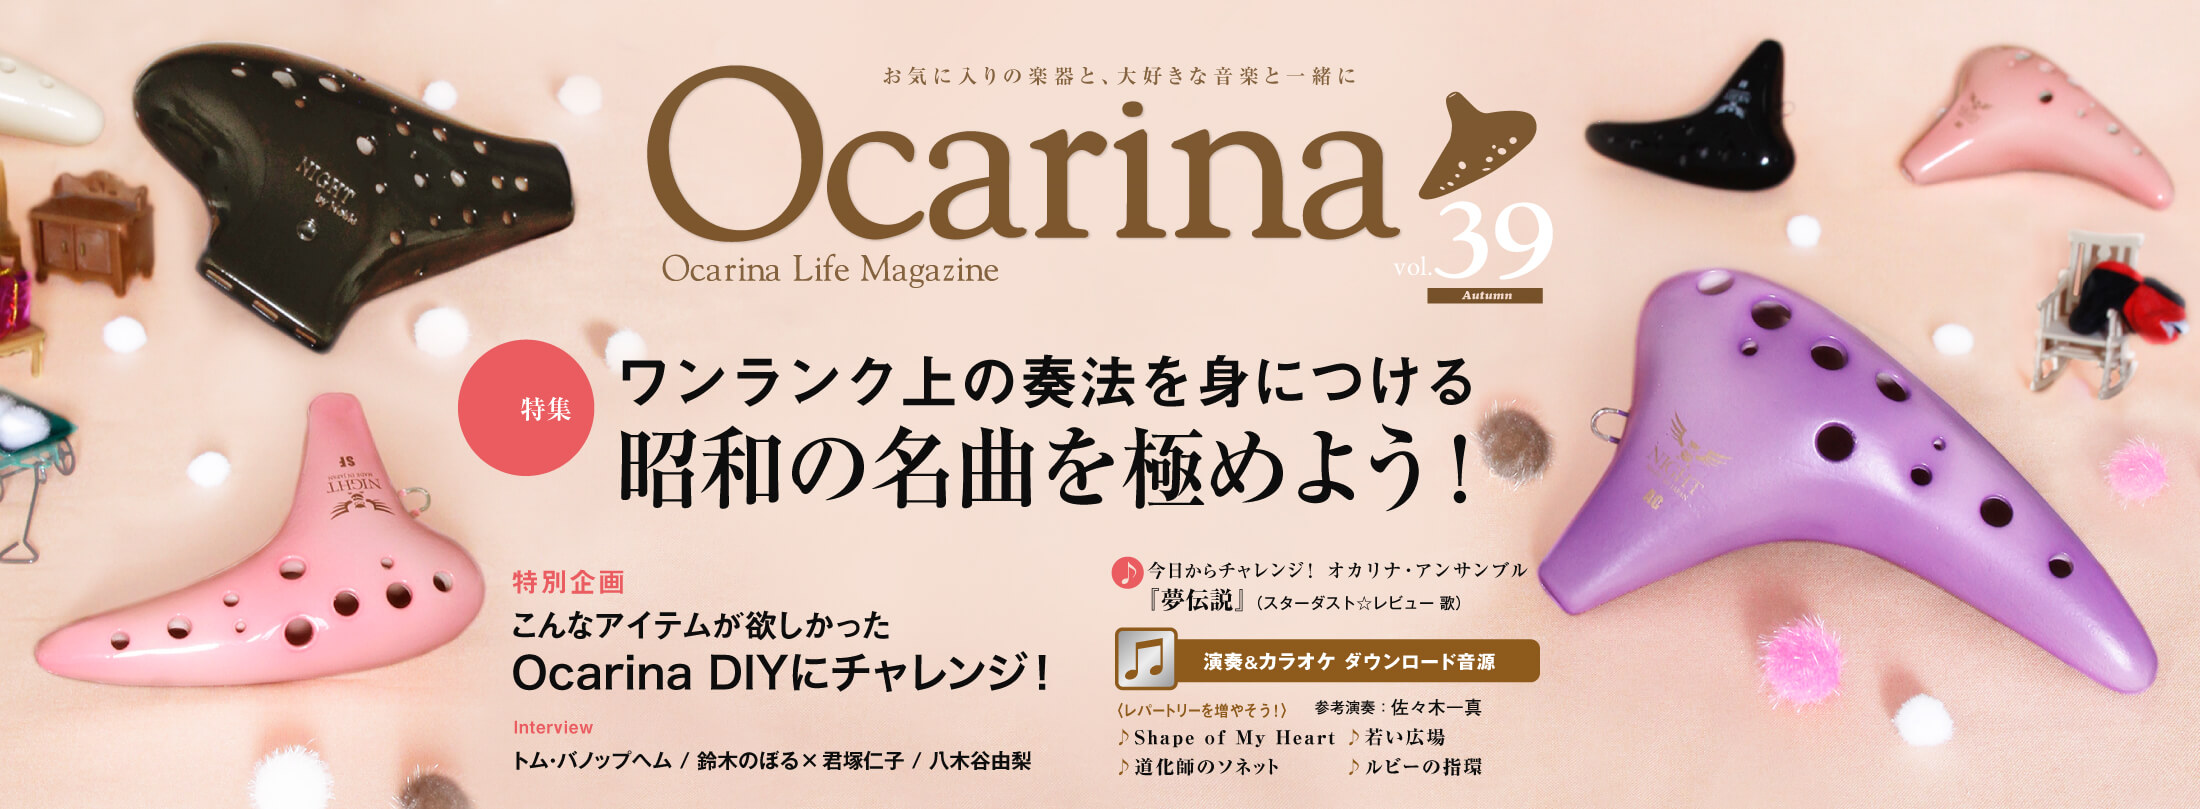 Ocarina 39号